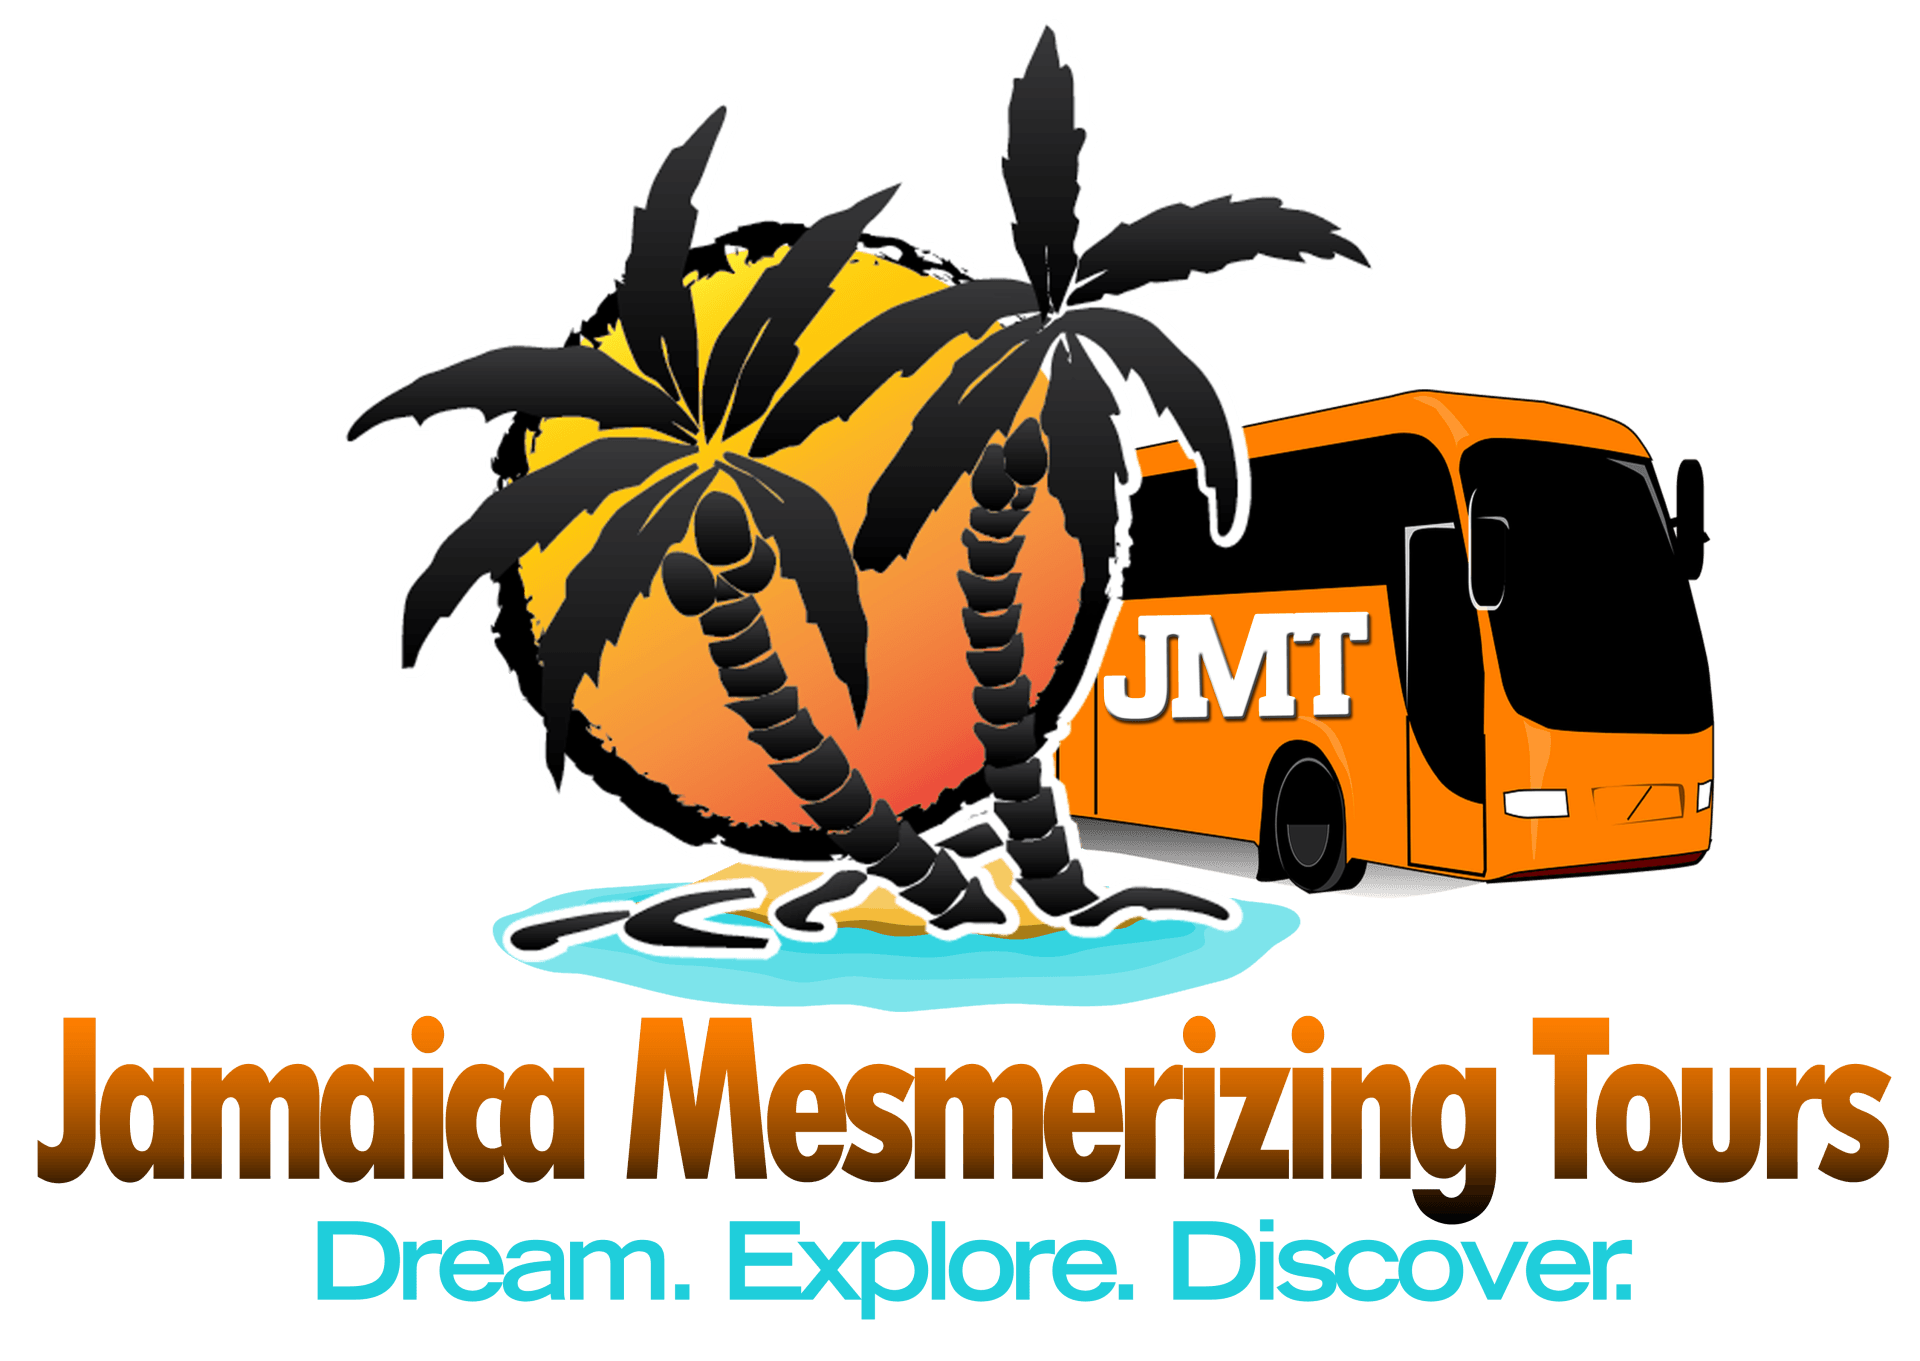 jamaica tours limited tours